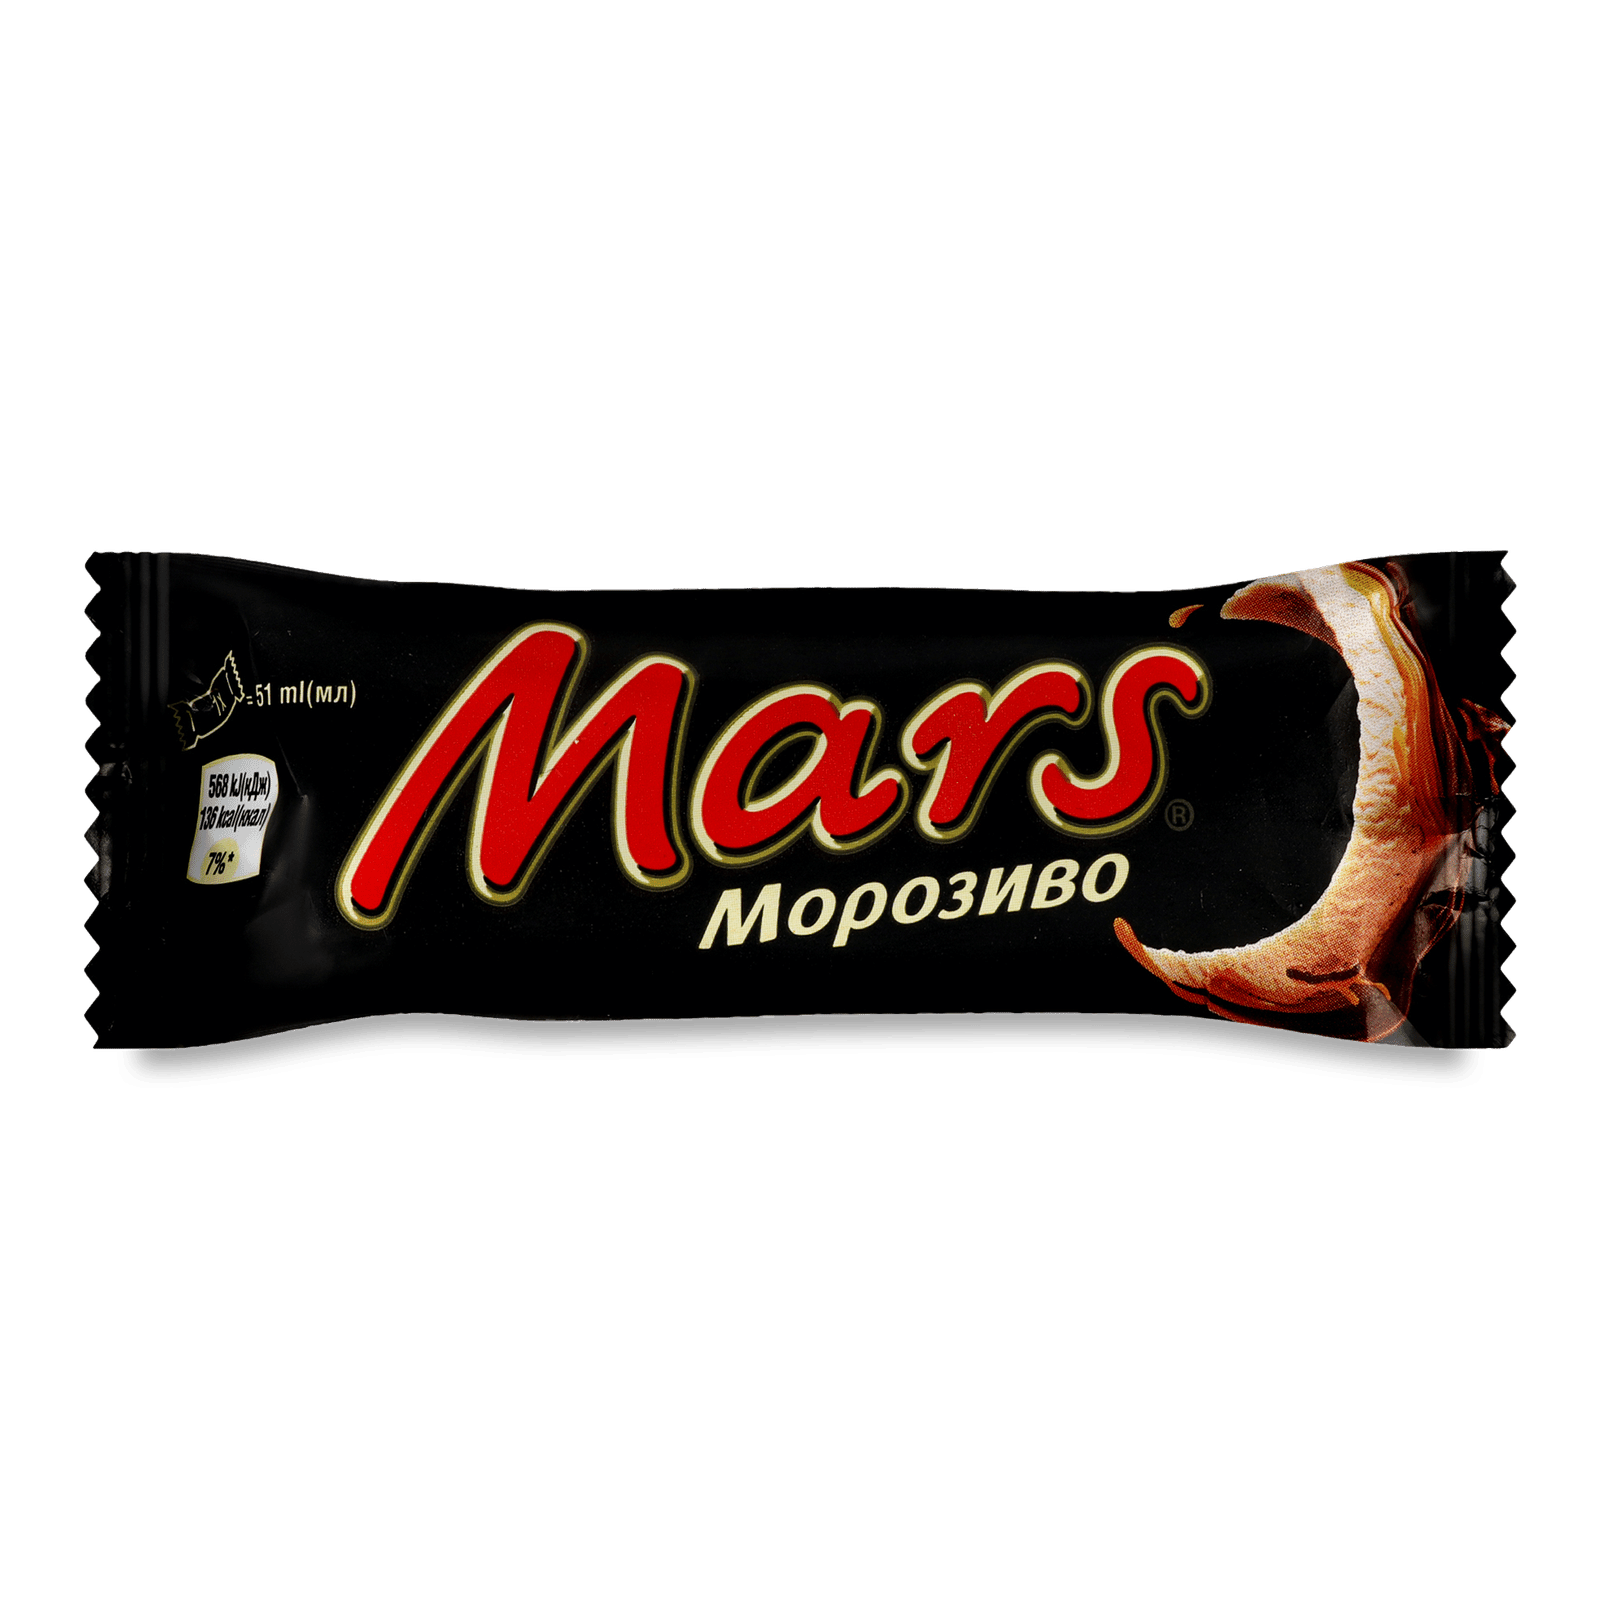 Морозиво Mars батончик - 1